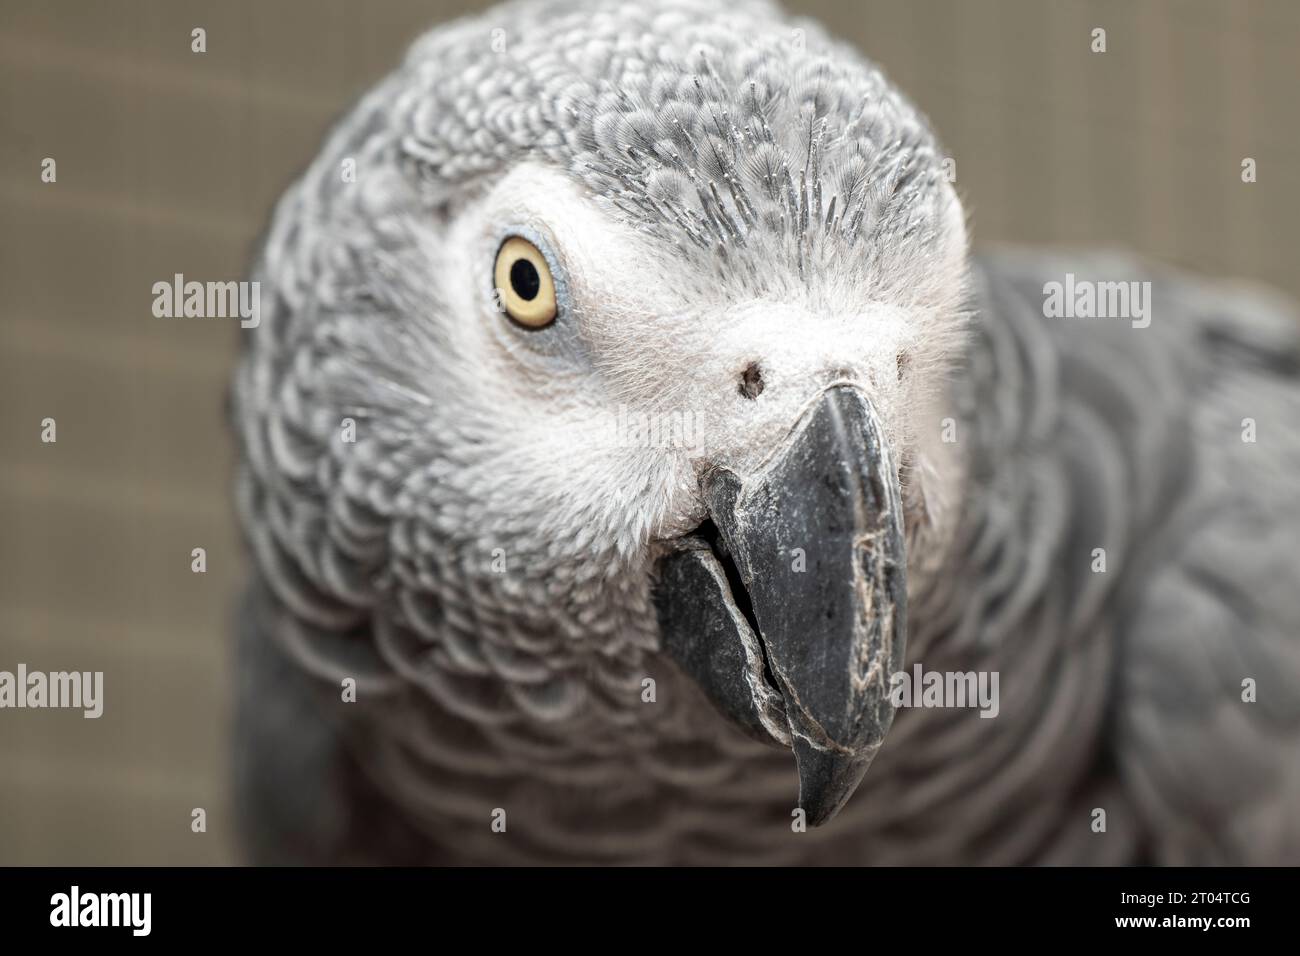 Head portrait of gray parrot Stock Photo